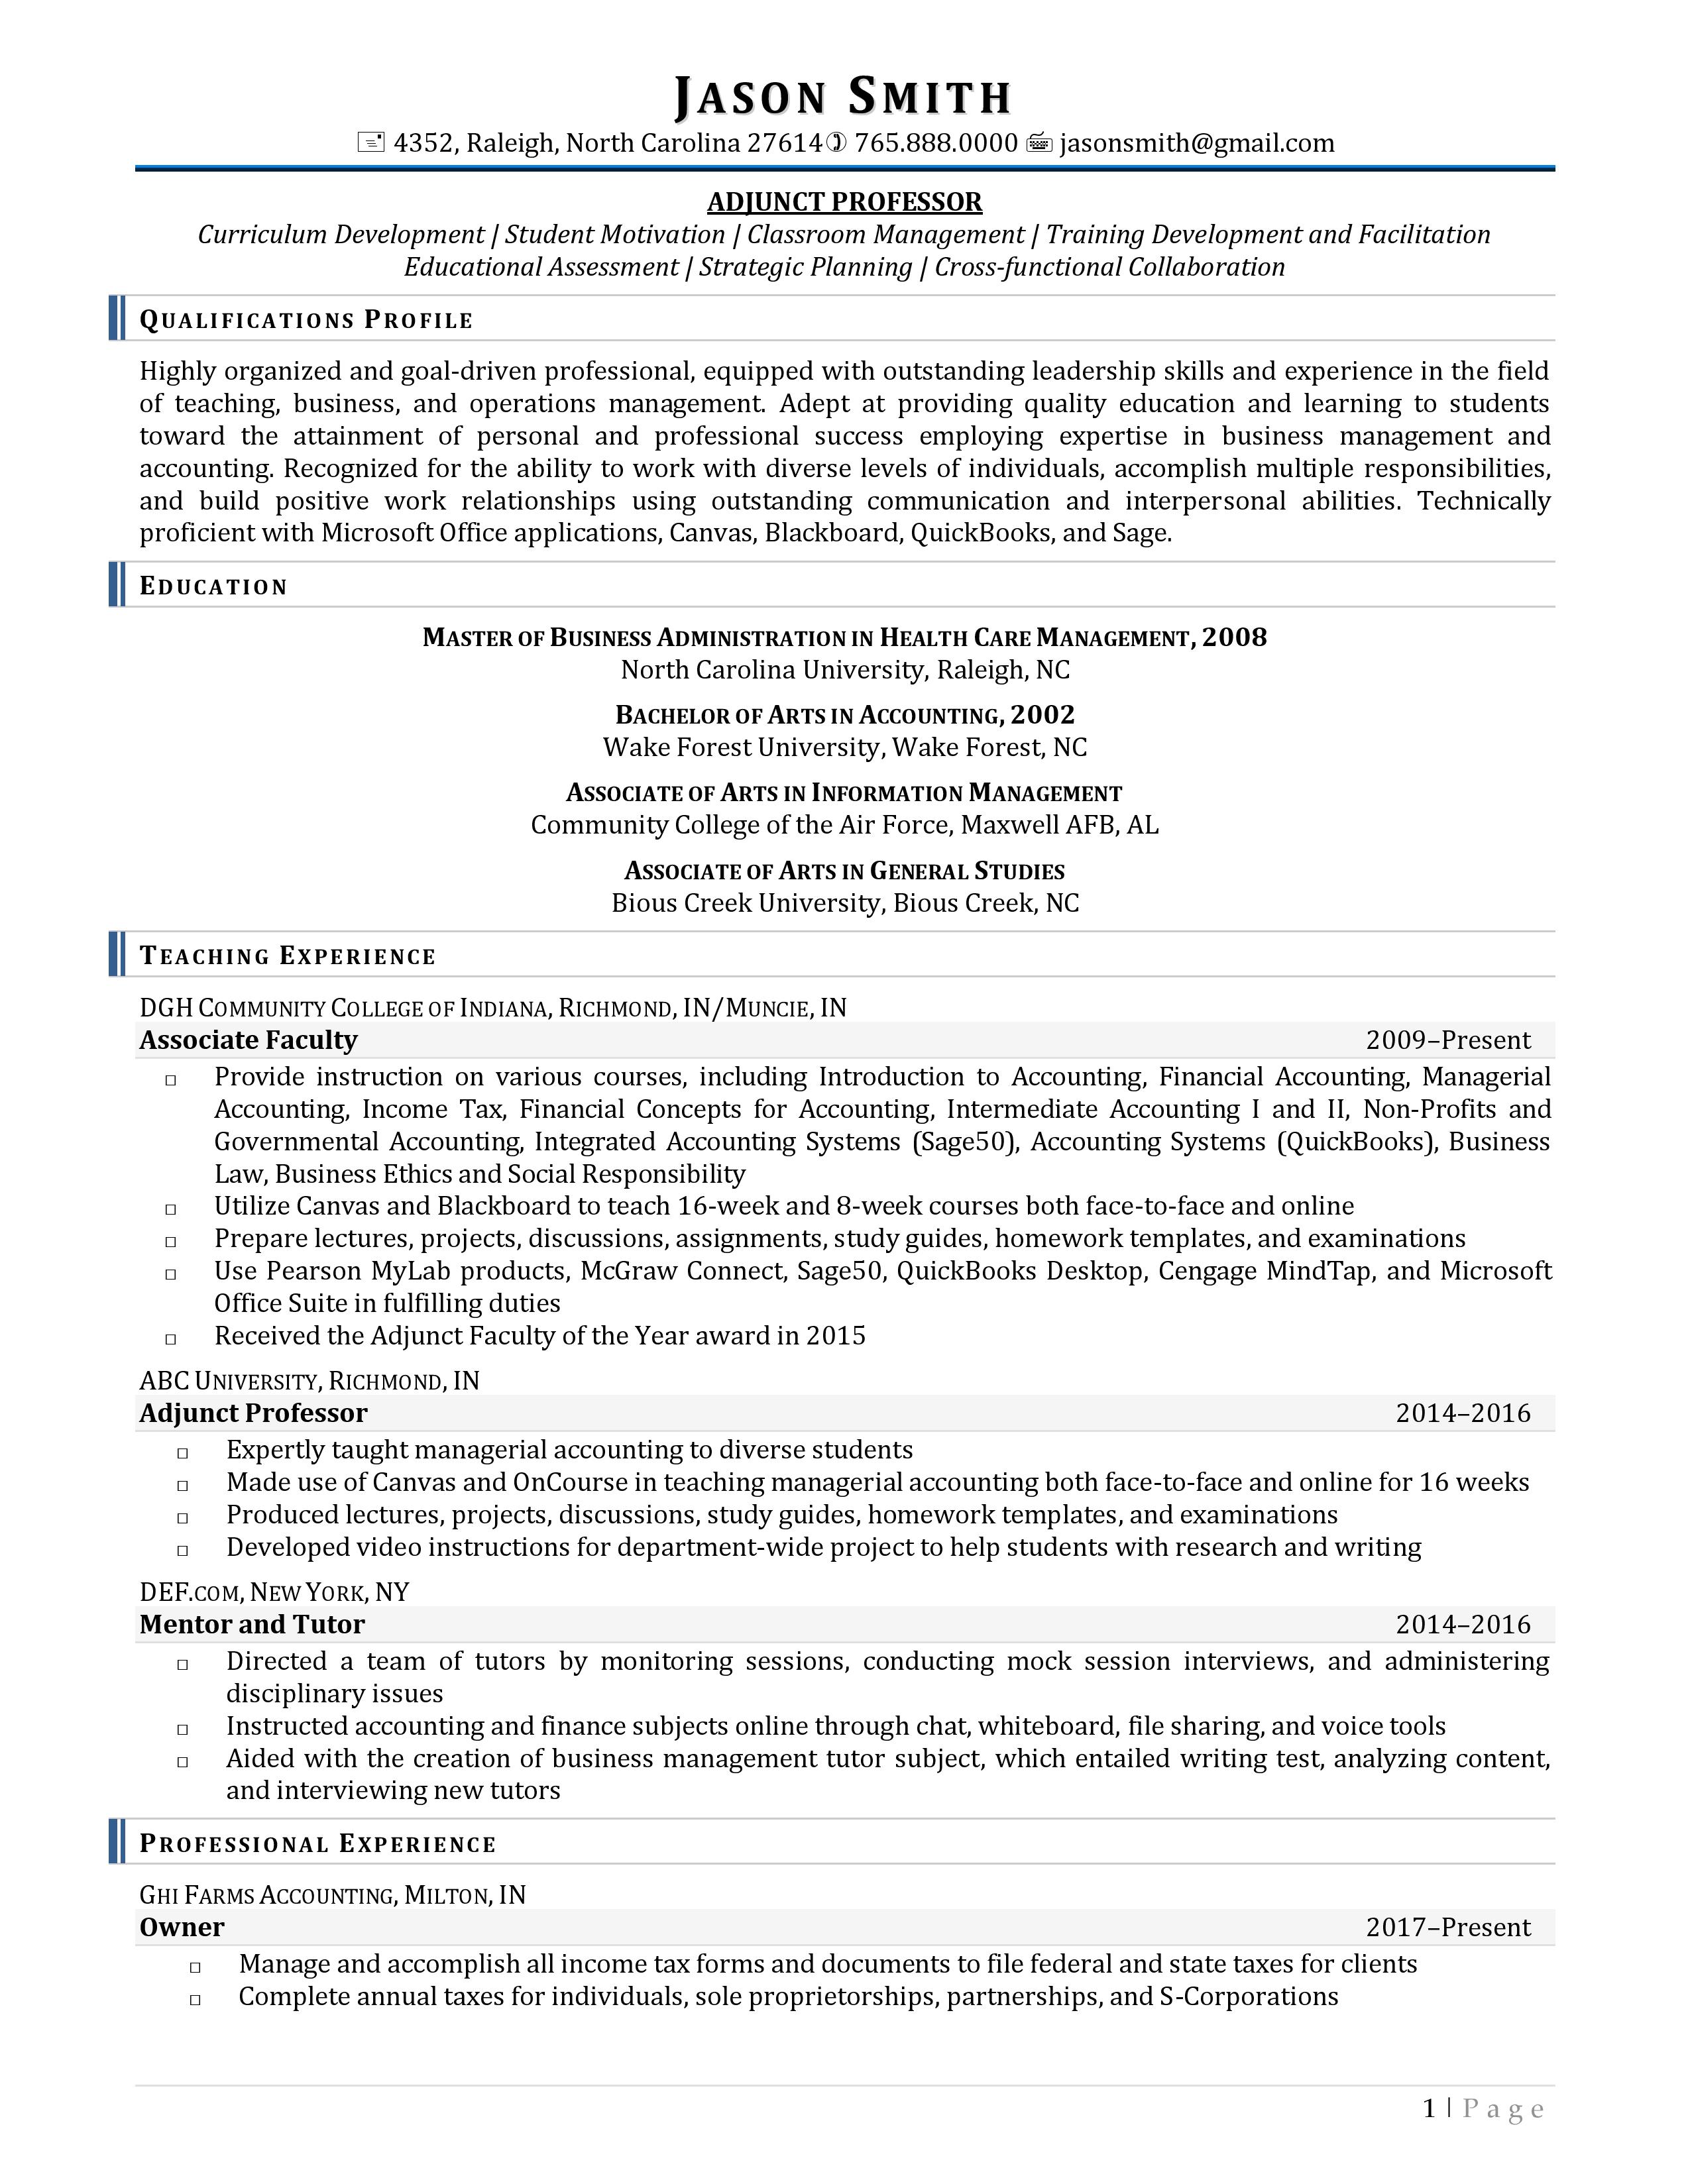 Sample long resume - page 1